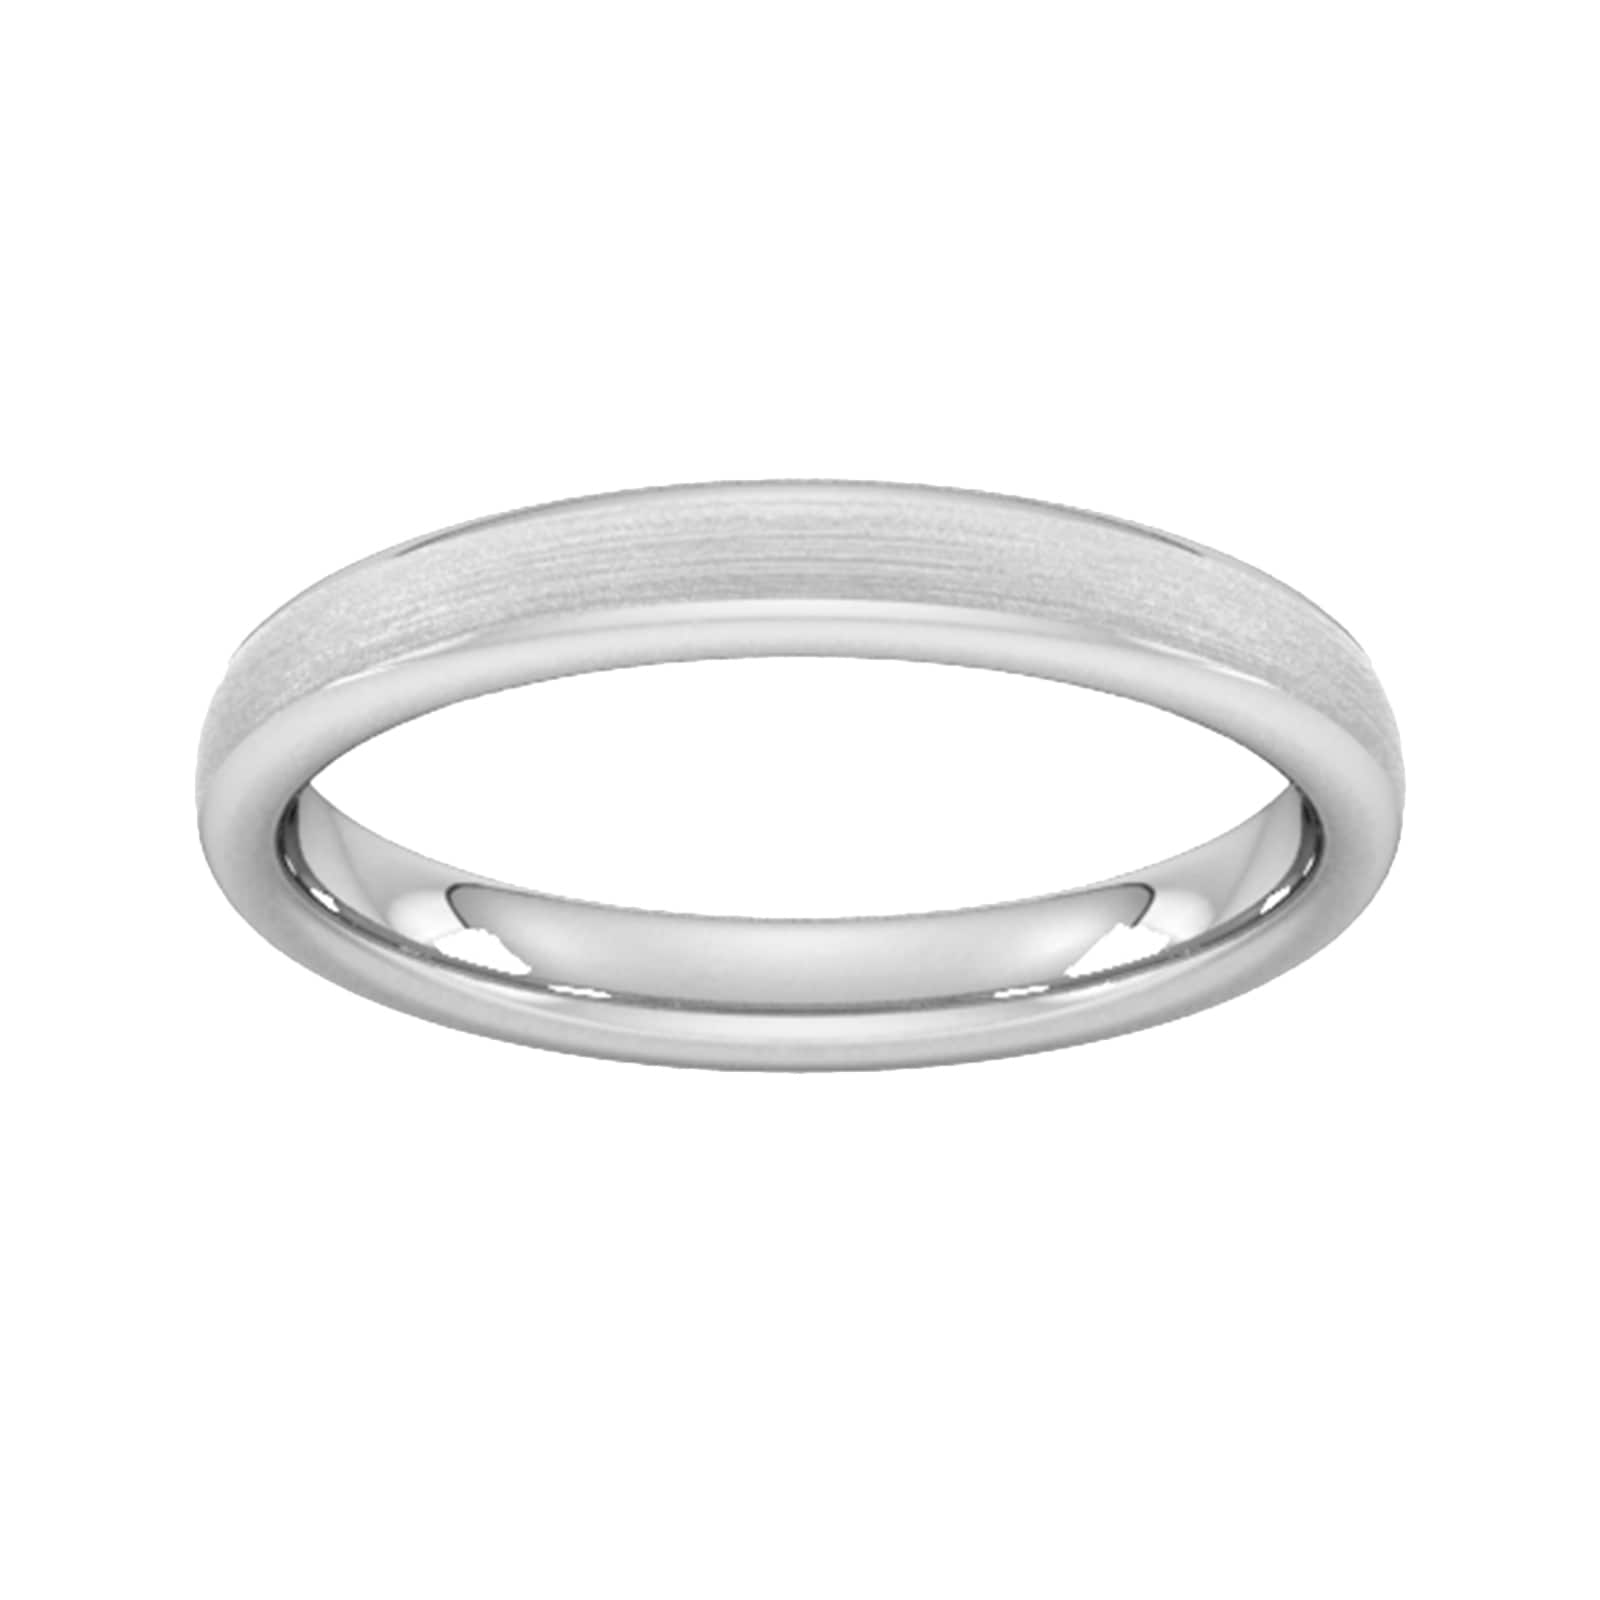 3mm Slight Court Standard Matt Finished Wedding Ring In 950 Palladium - Ring Size R